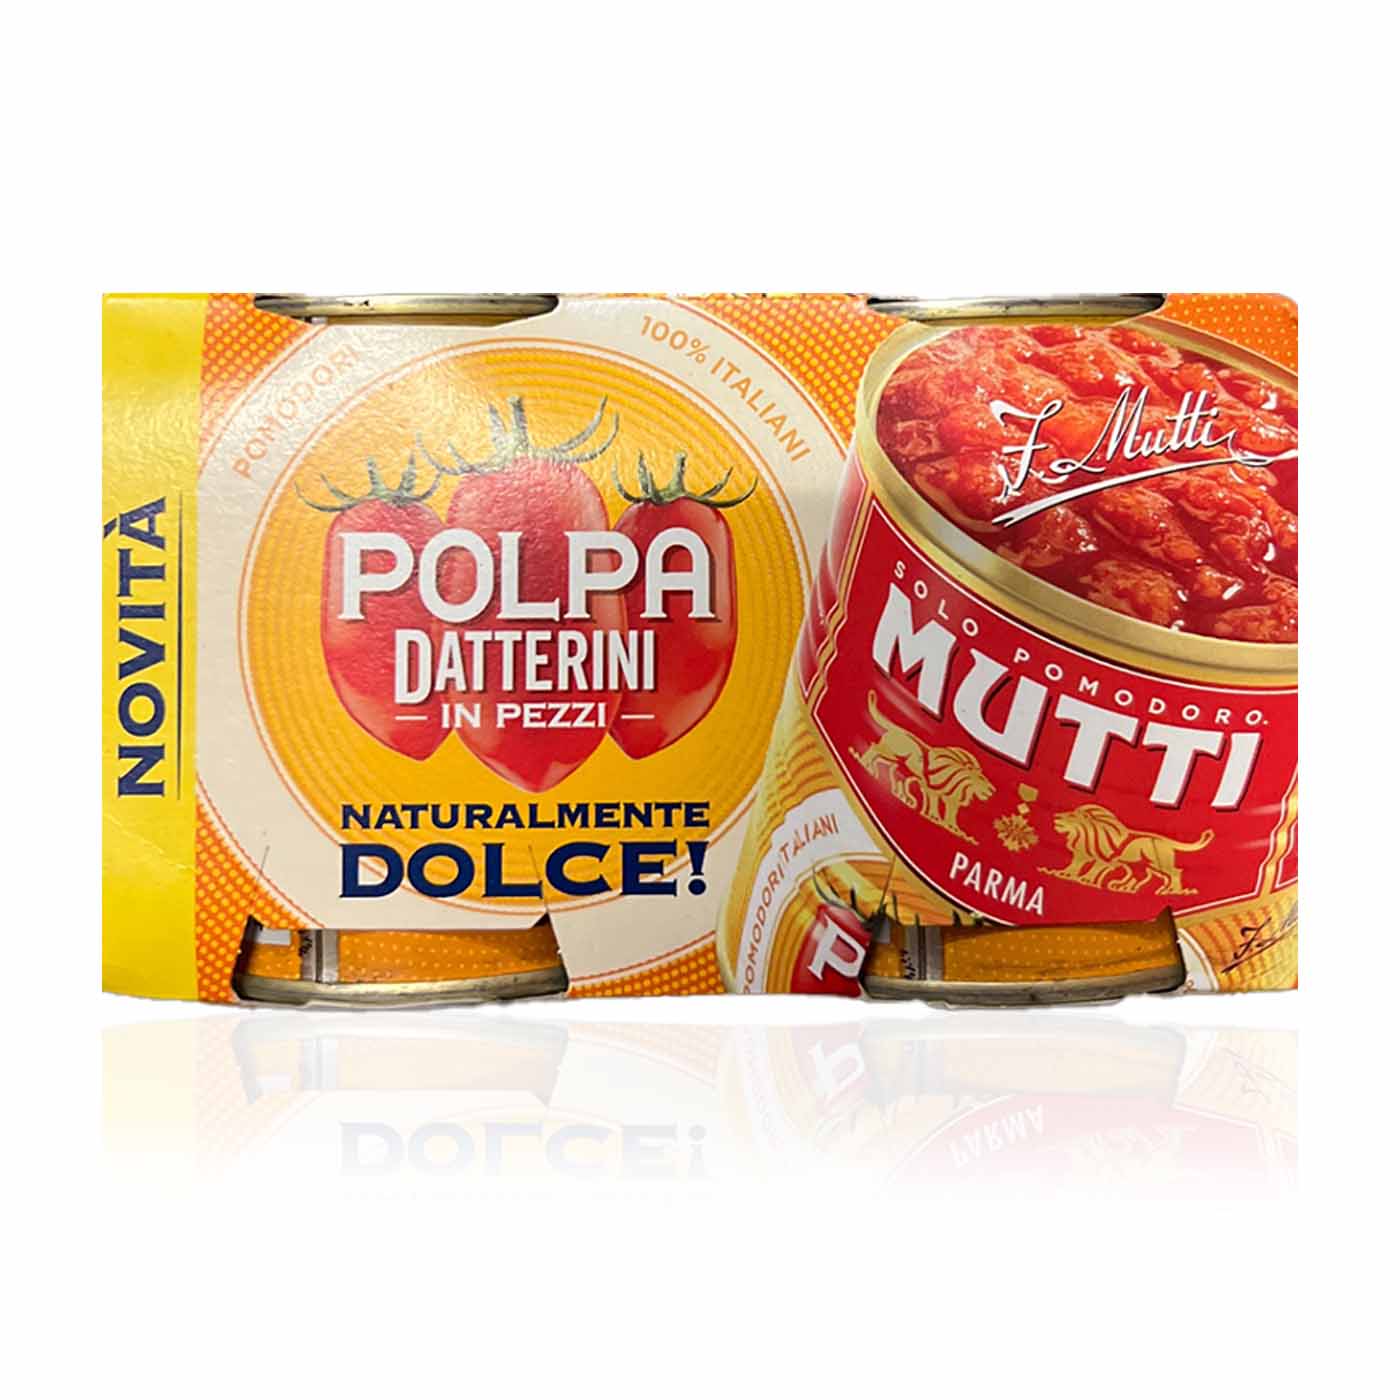 MUTTI Polpa datterini a pezzo- Datteltomatenfruchtflsich - 0,6kg